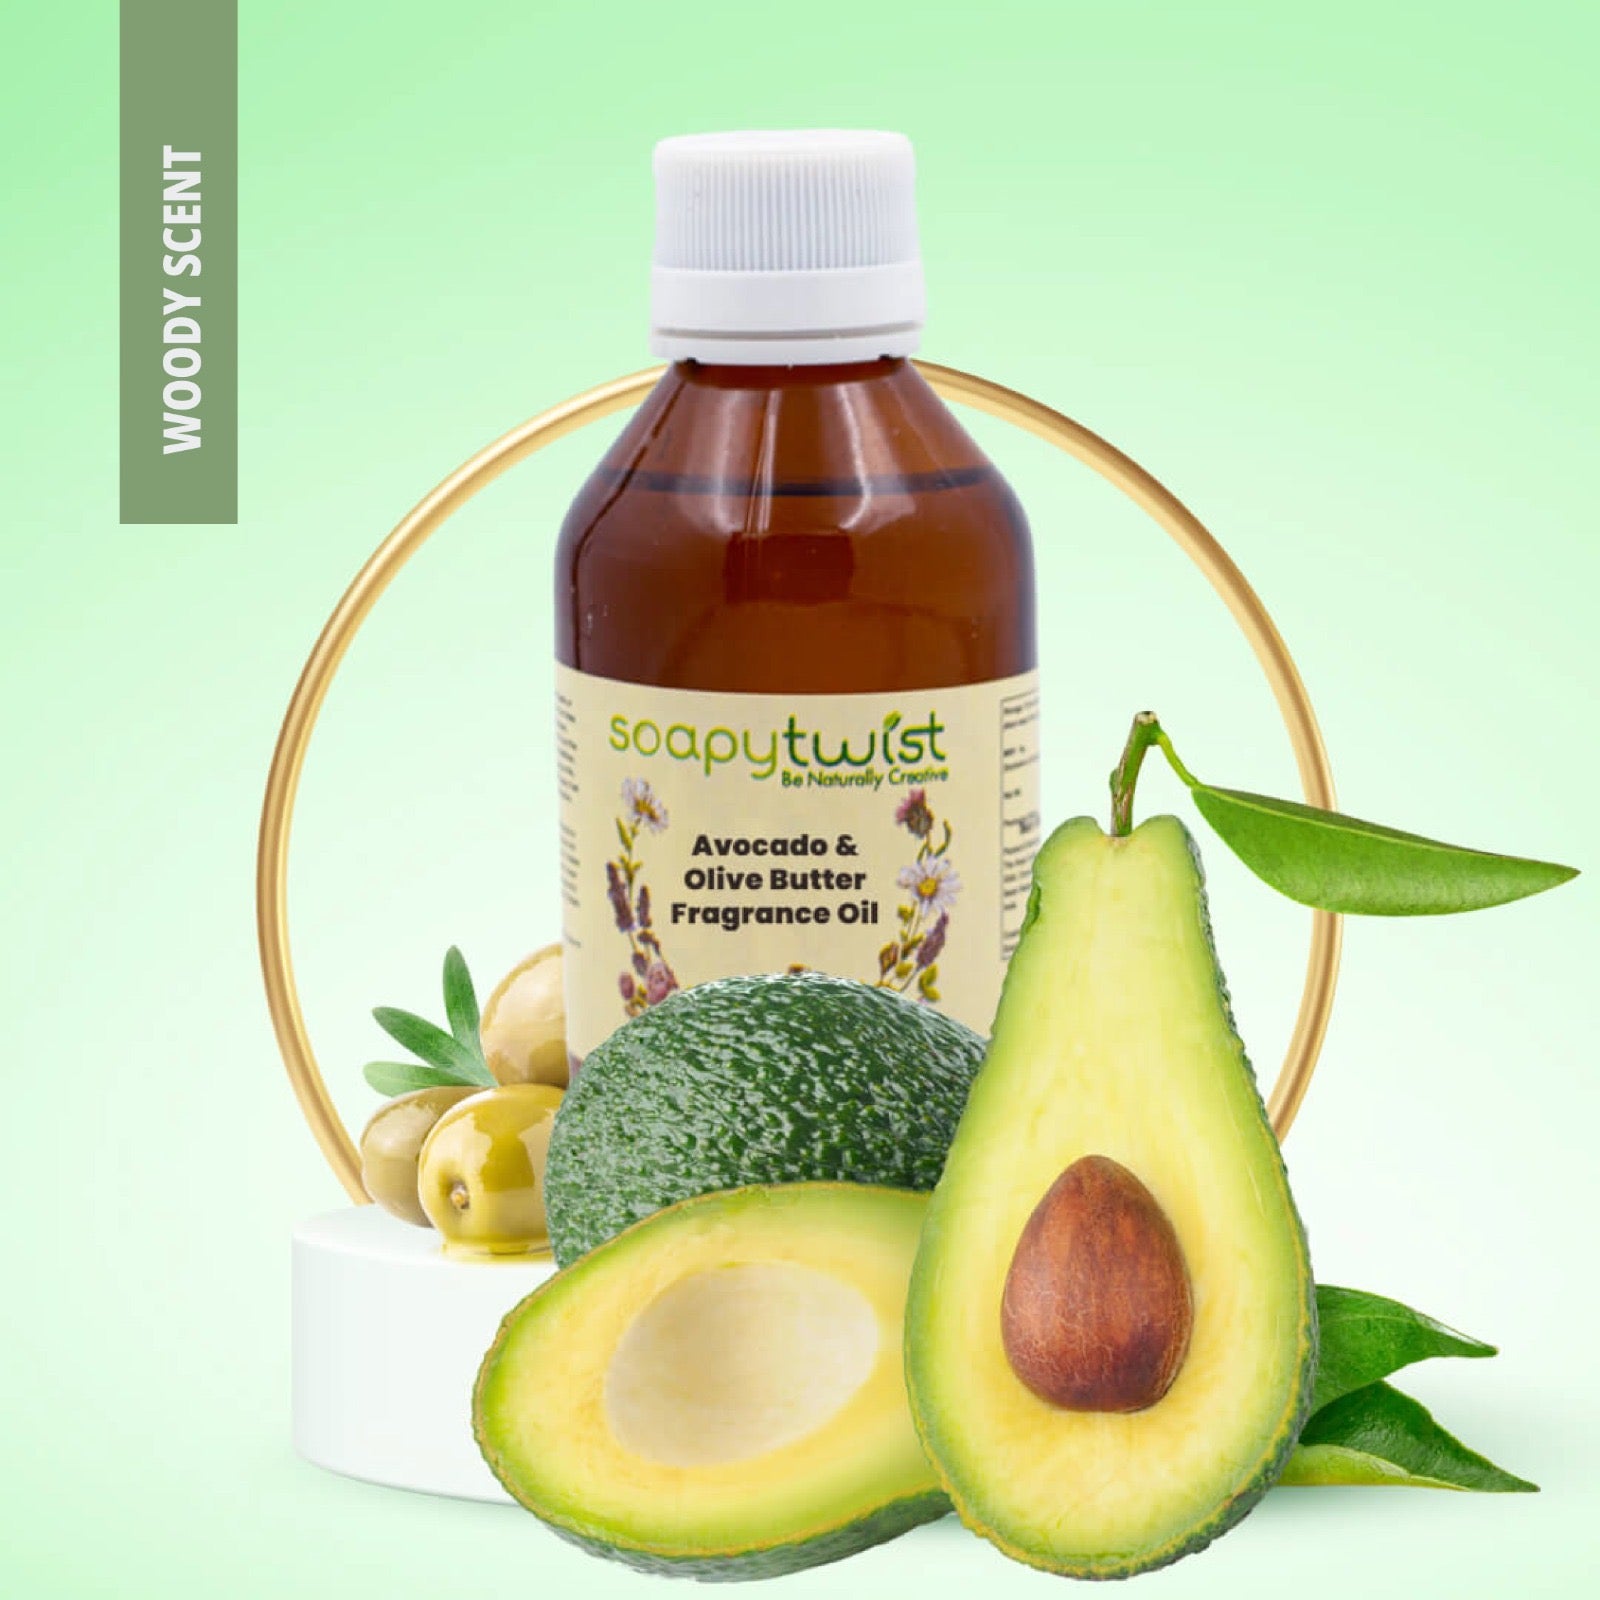 Avocado & Olive Butter Fragrance Oil